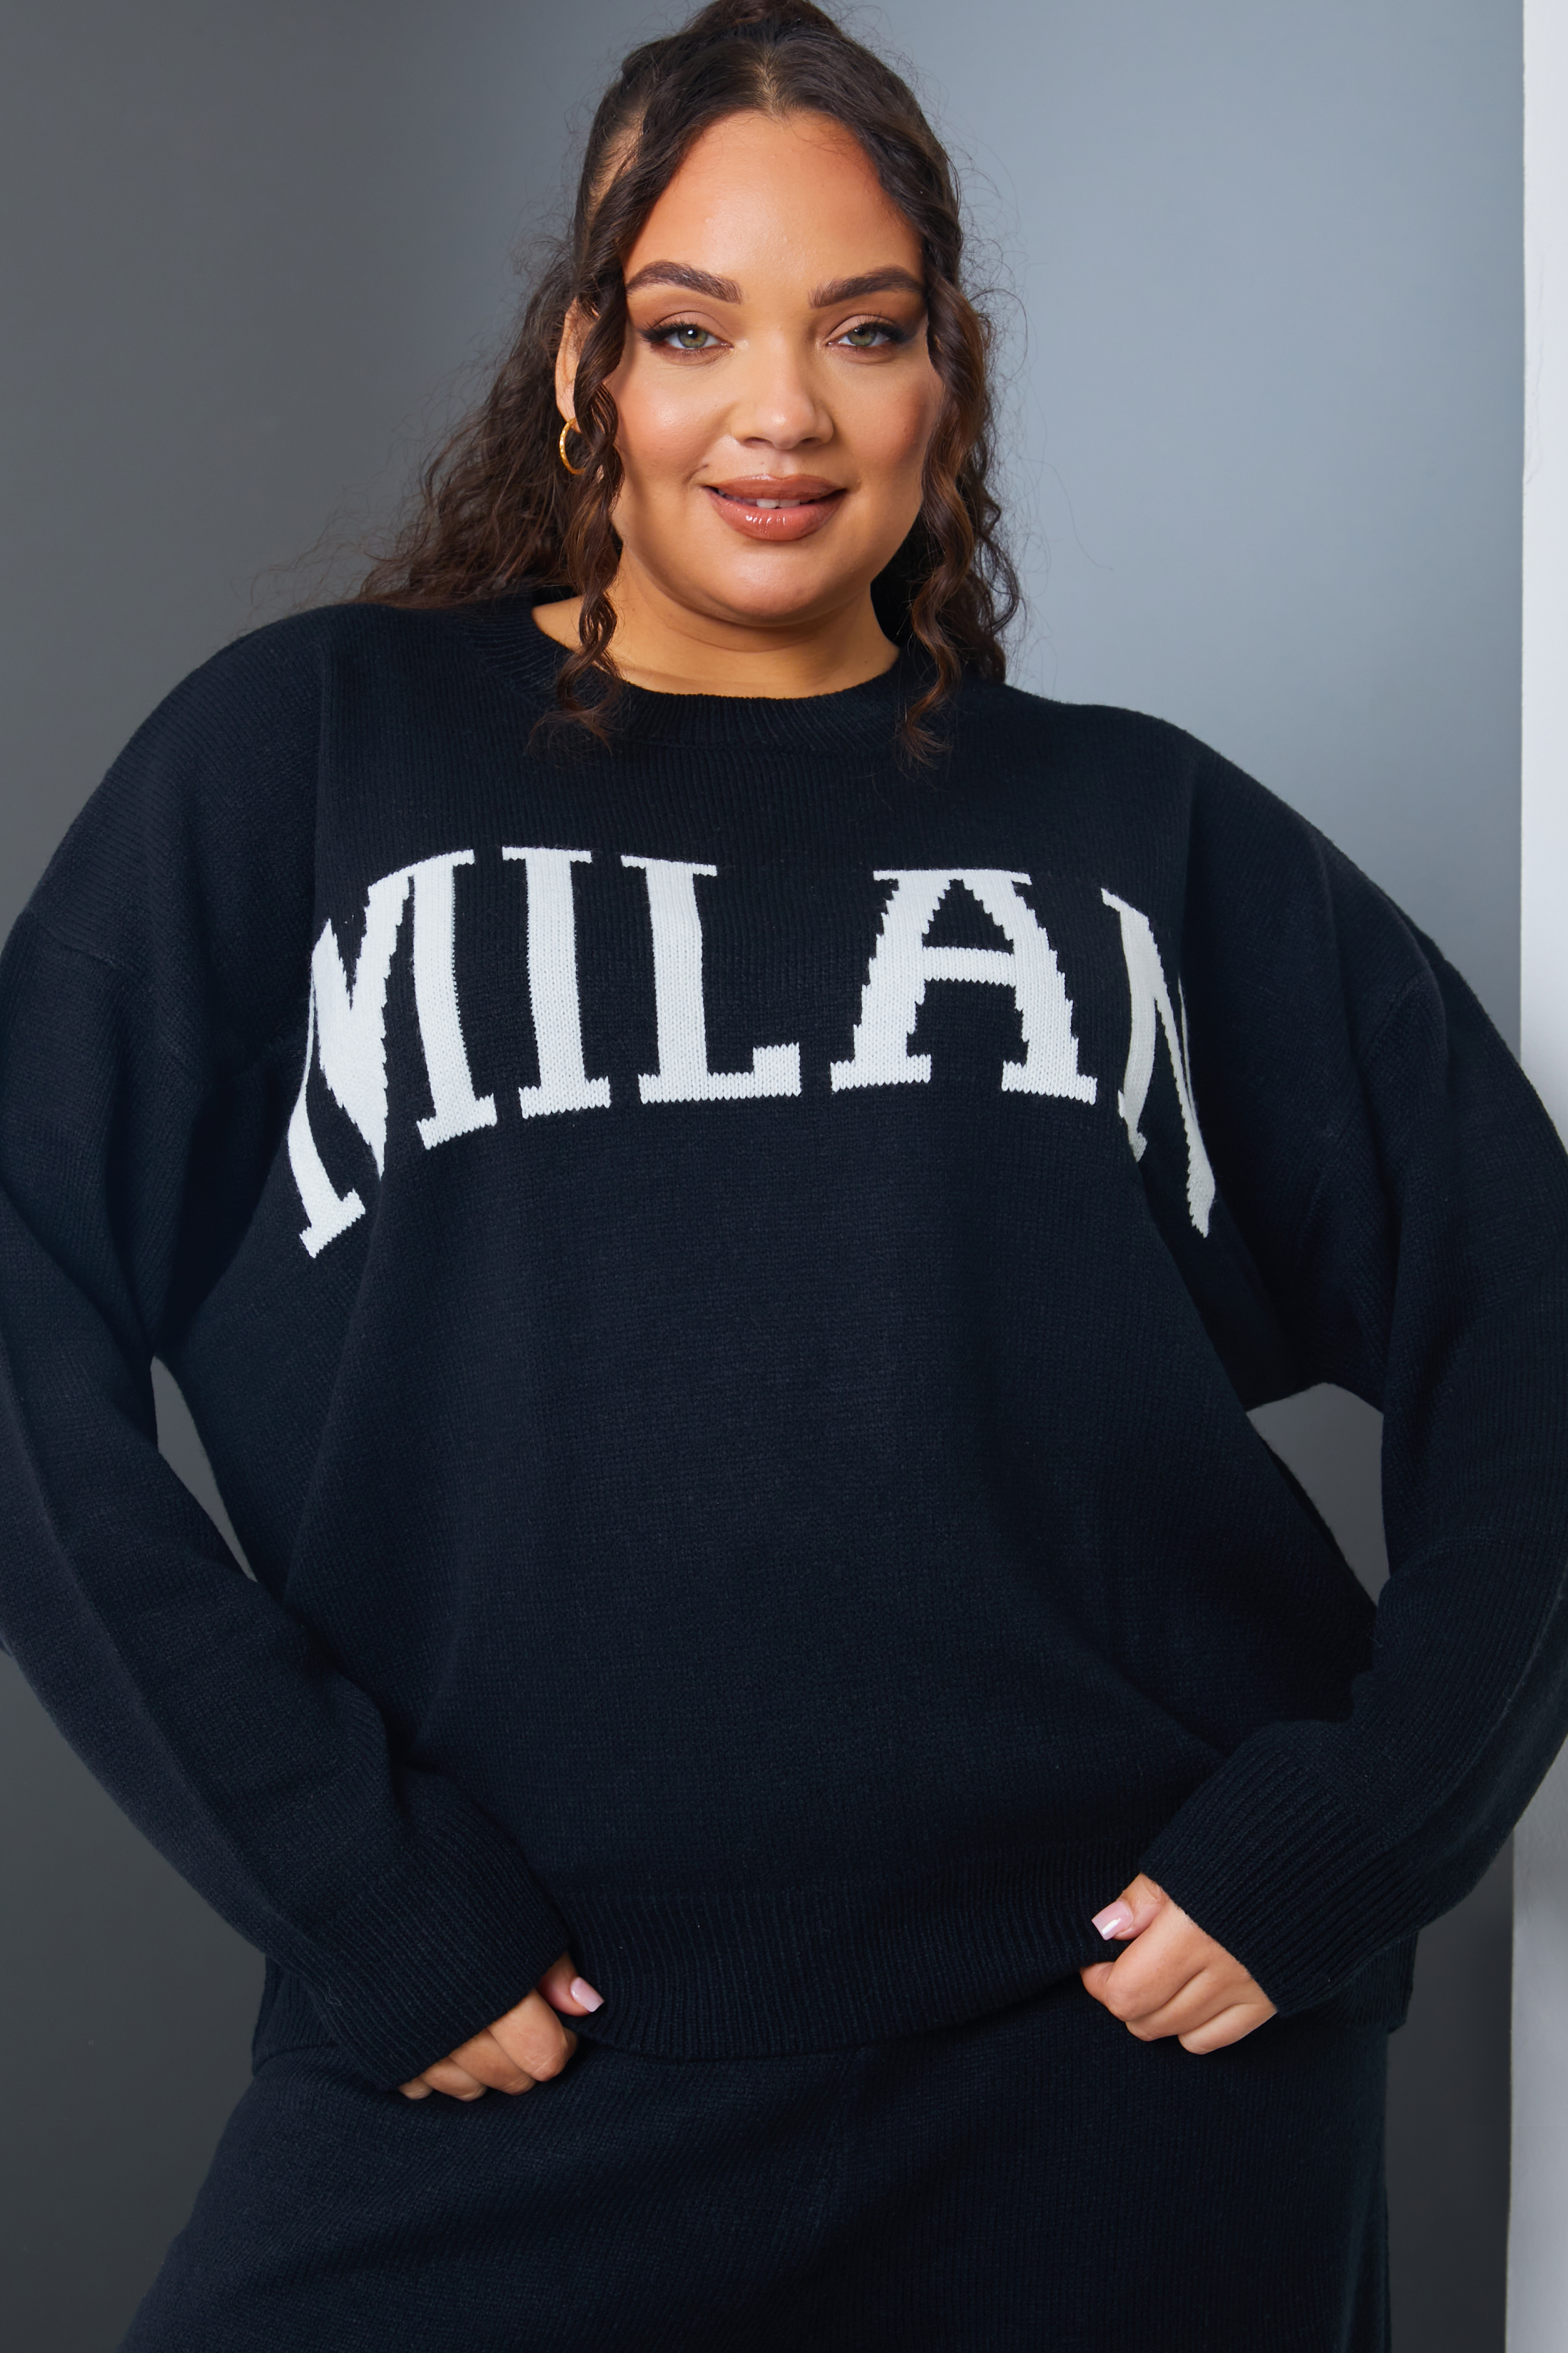 'Milan' Knitted Jumper